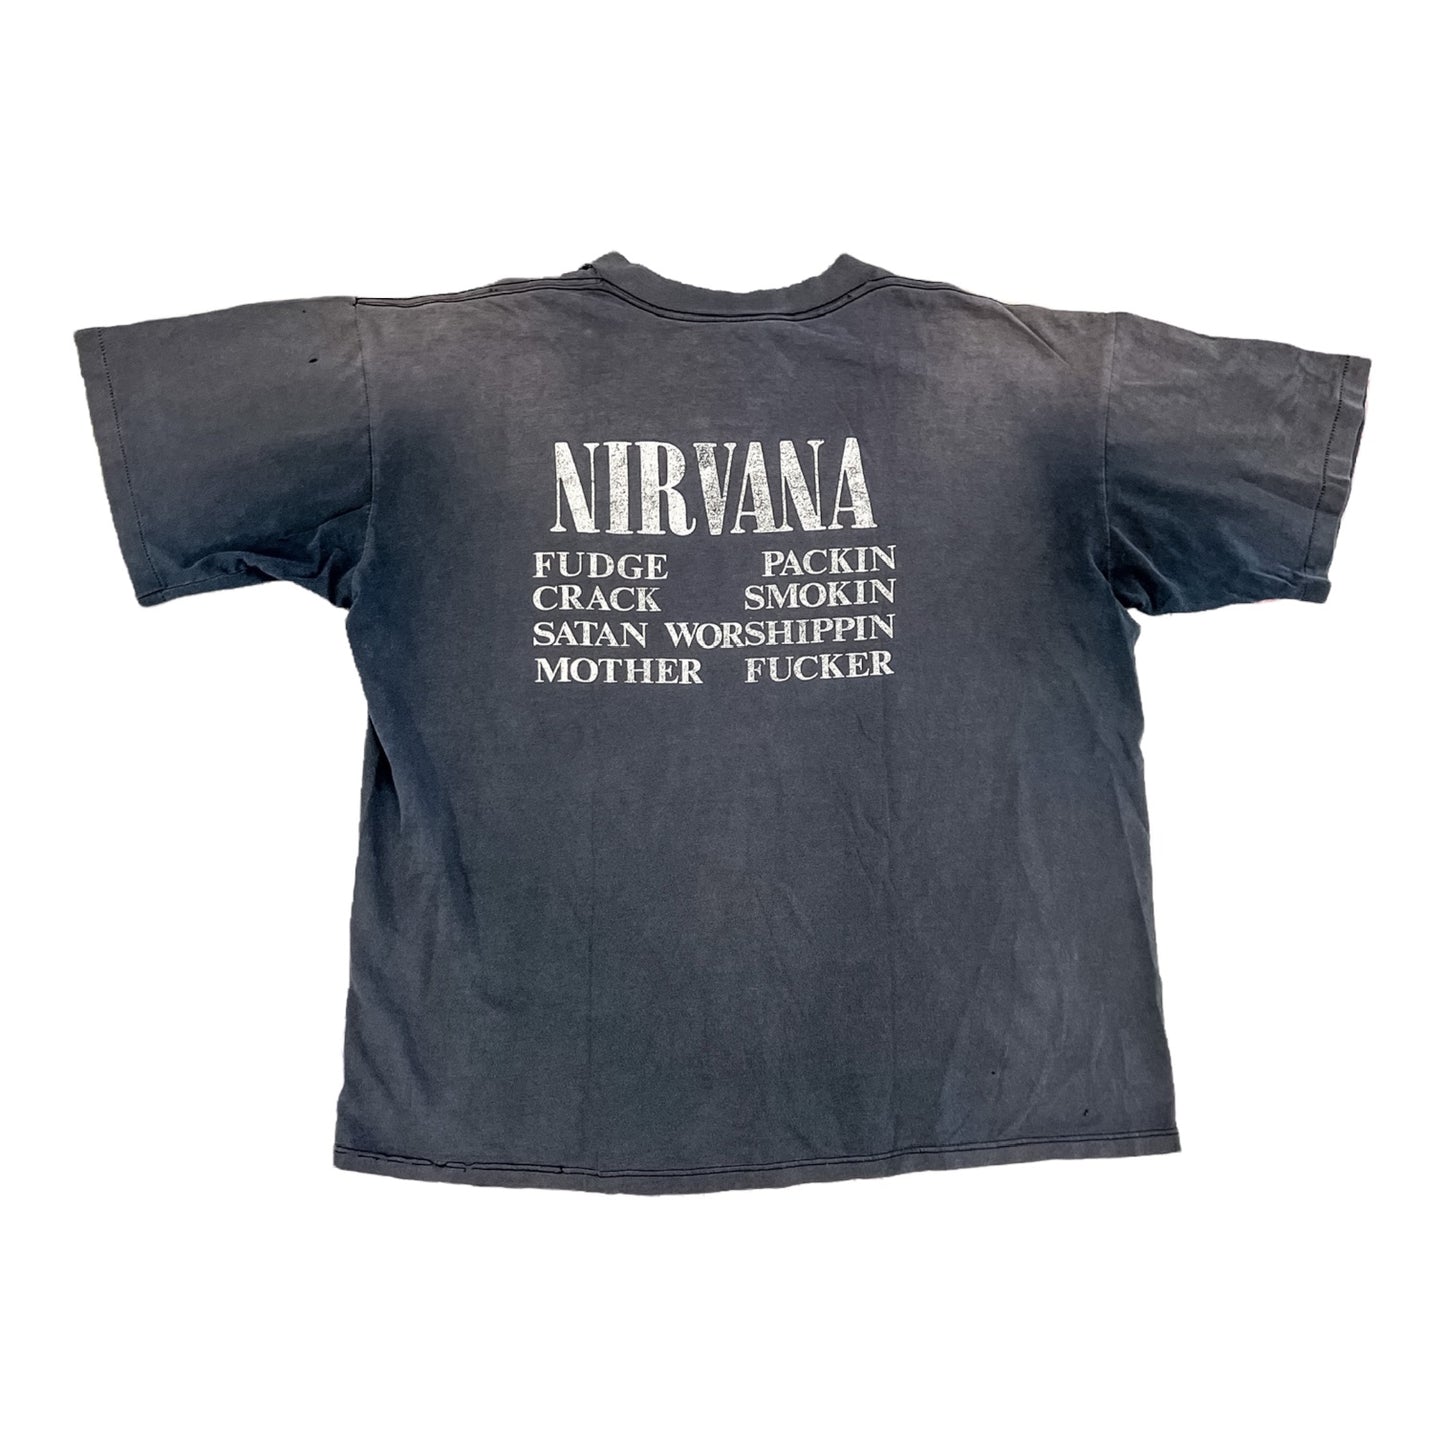 Original Vintage 1992 Nirvana Vestibule Circles Of Hell Dante's Inferno Shirt